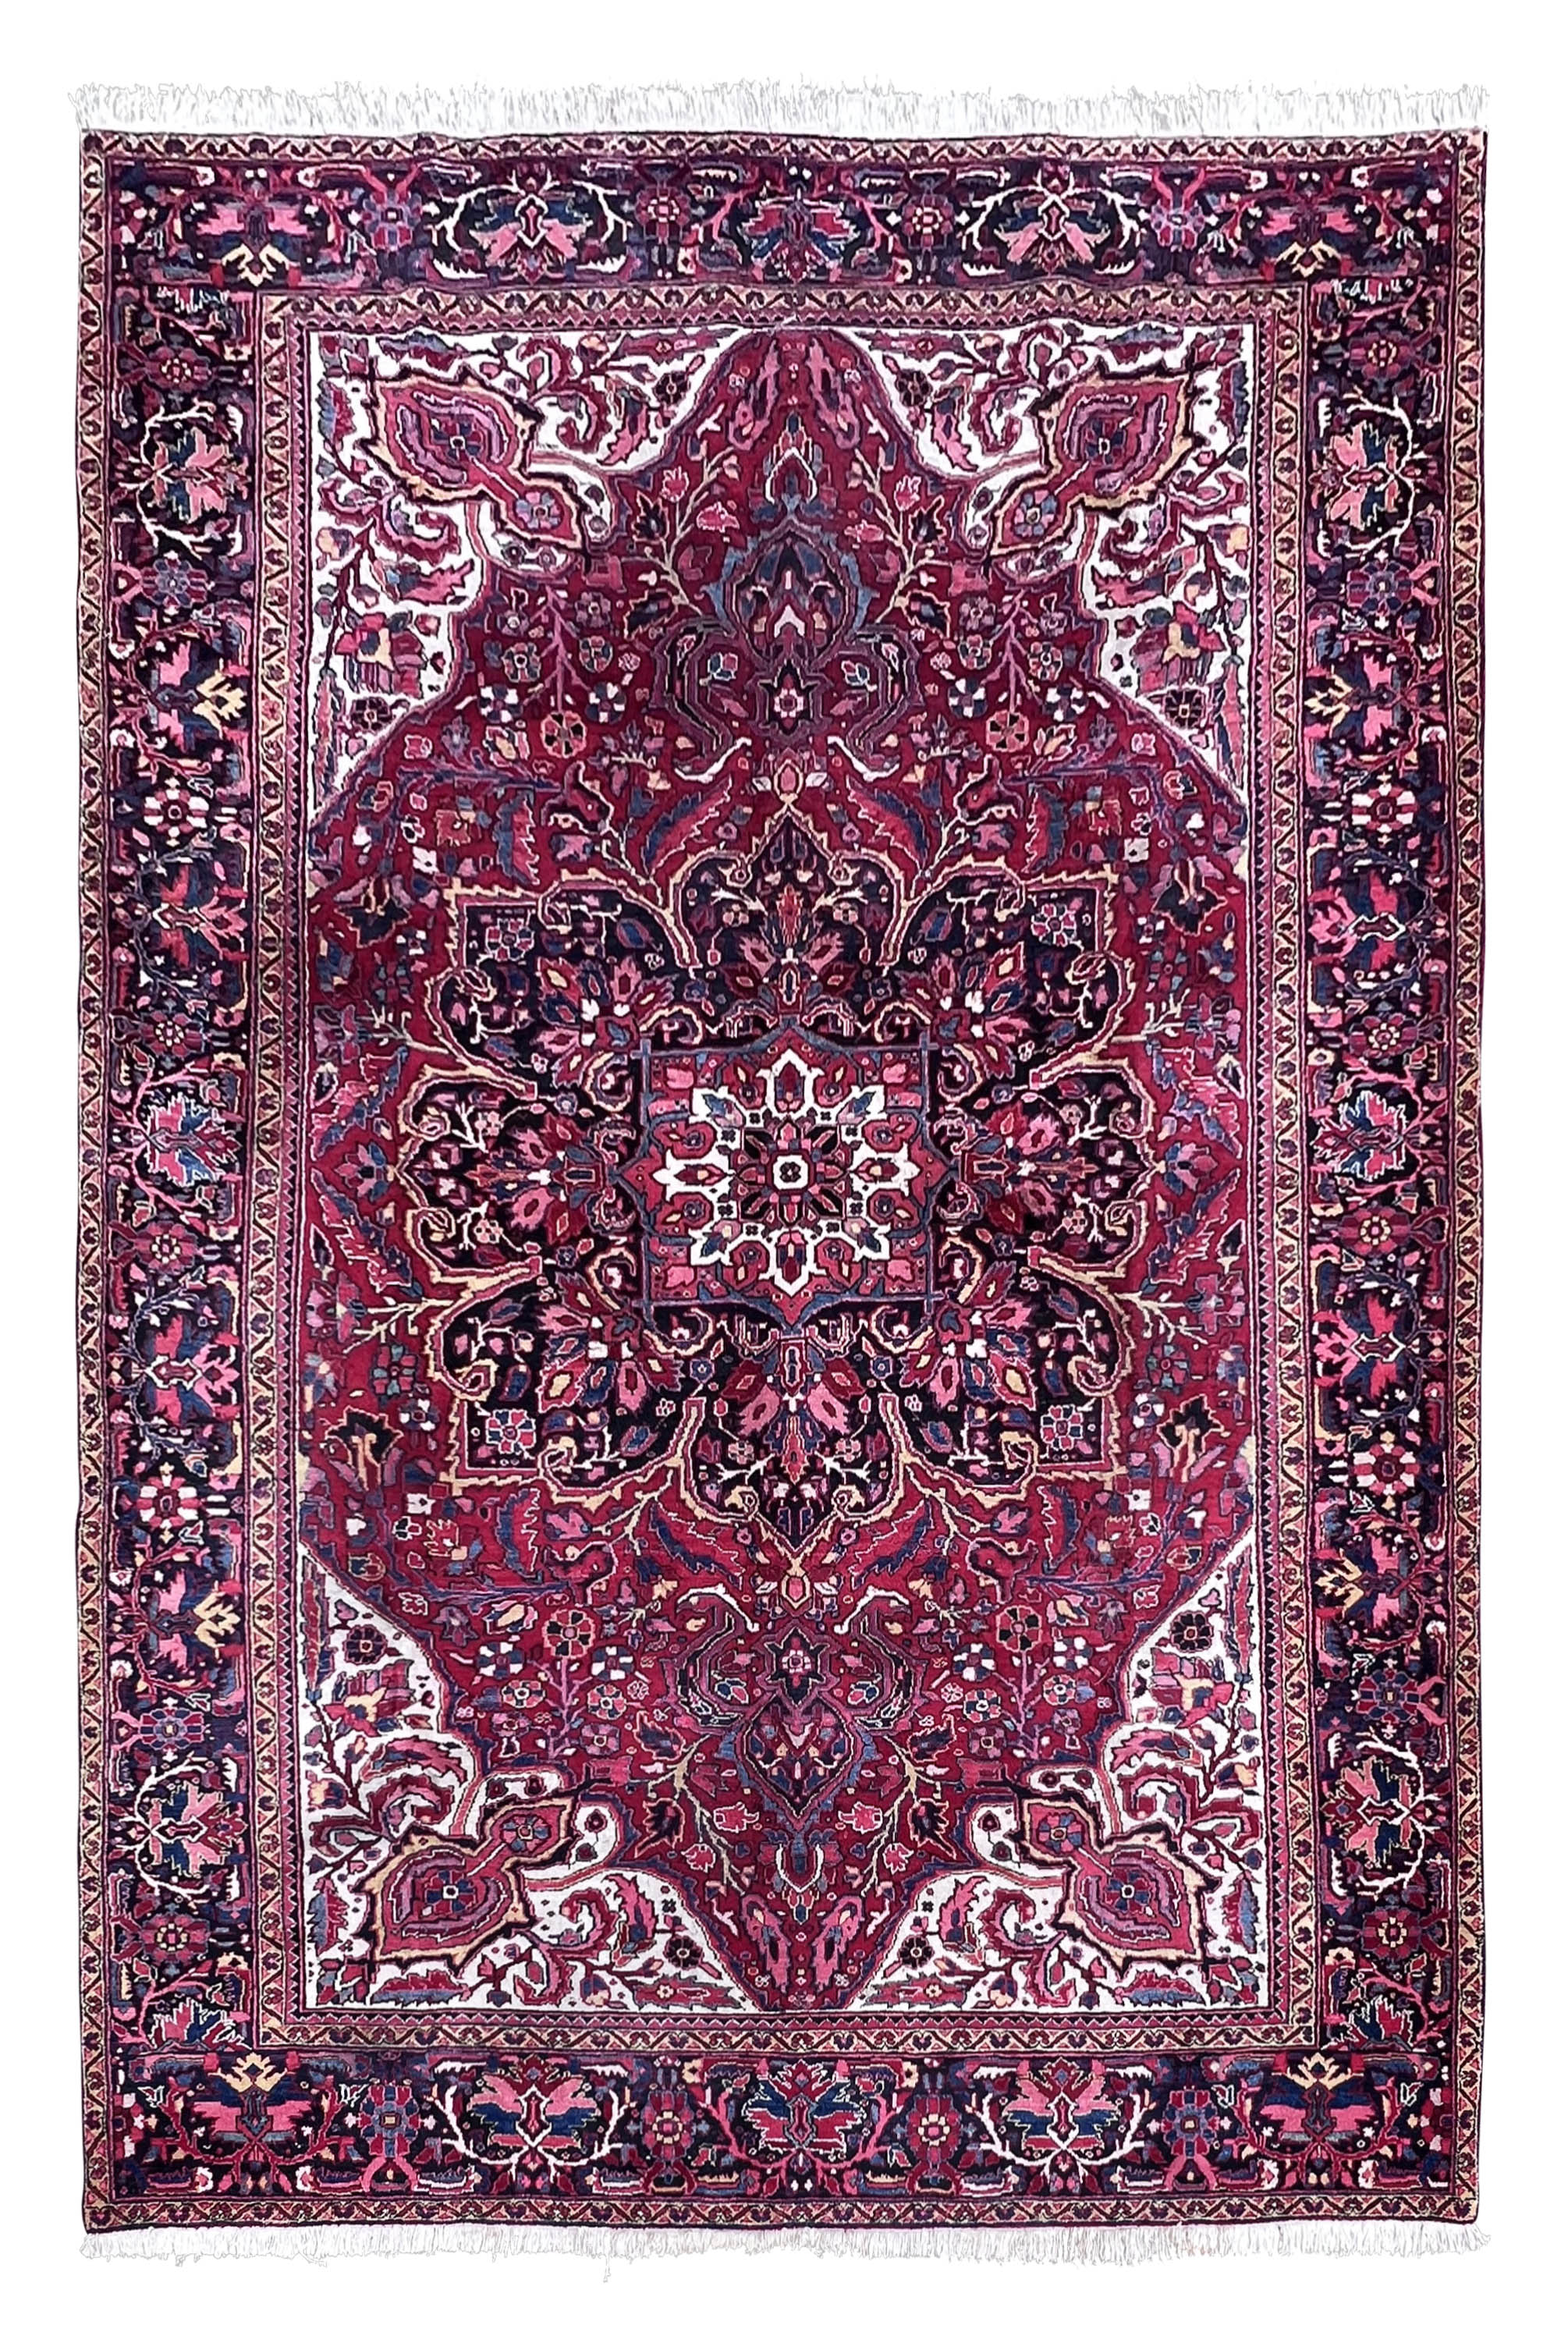 Heriz. Oriental carpet. 20th Century.